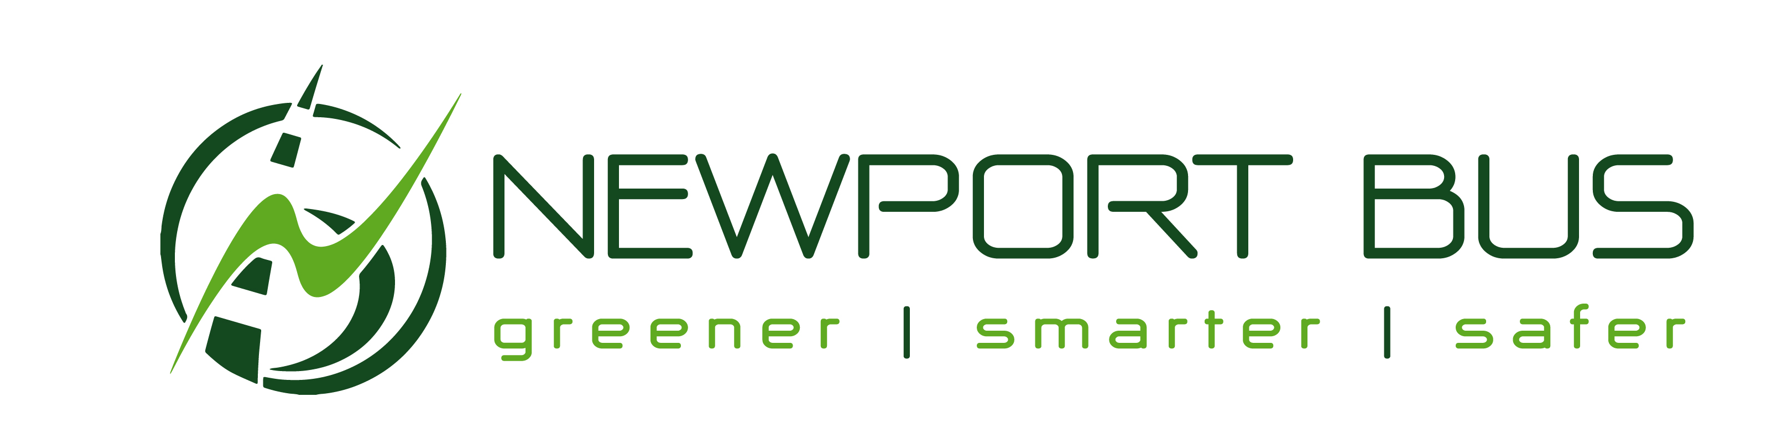 Newport Bus logo